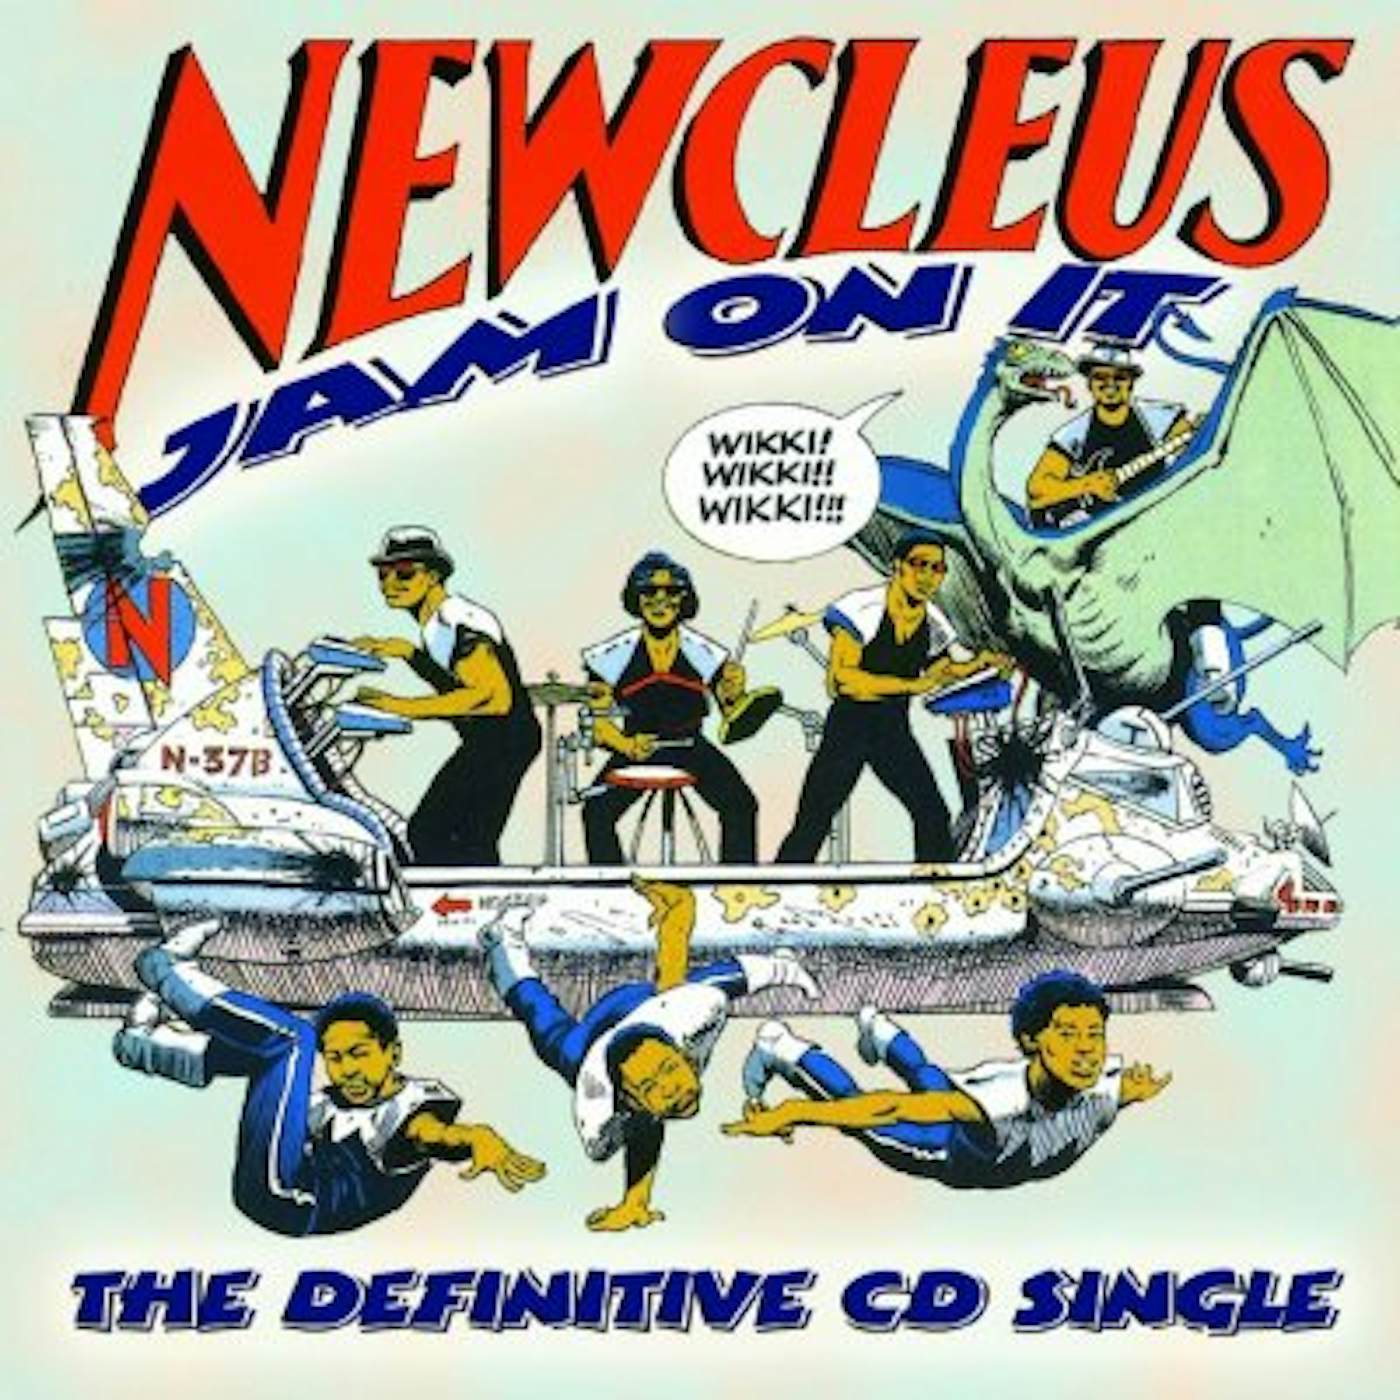 Newcleus JAM ON IT: THE DEFINITIVE CD